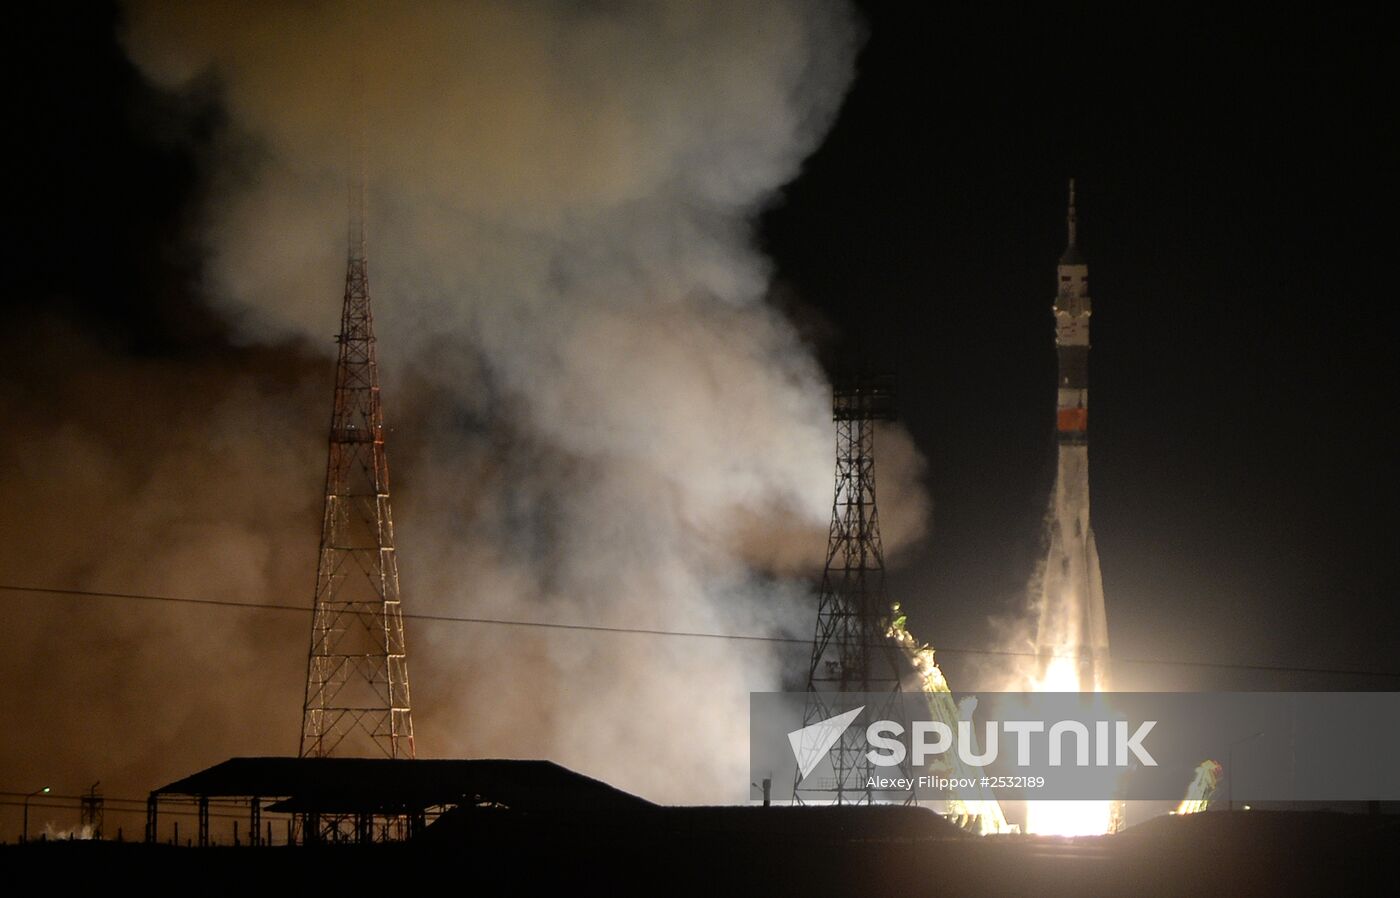 Blast off of Soyuz-FG rocket with Soyuz TMA-15M spacecraft at Baikonur cosmodrome